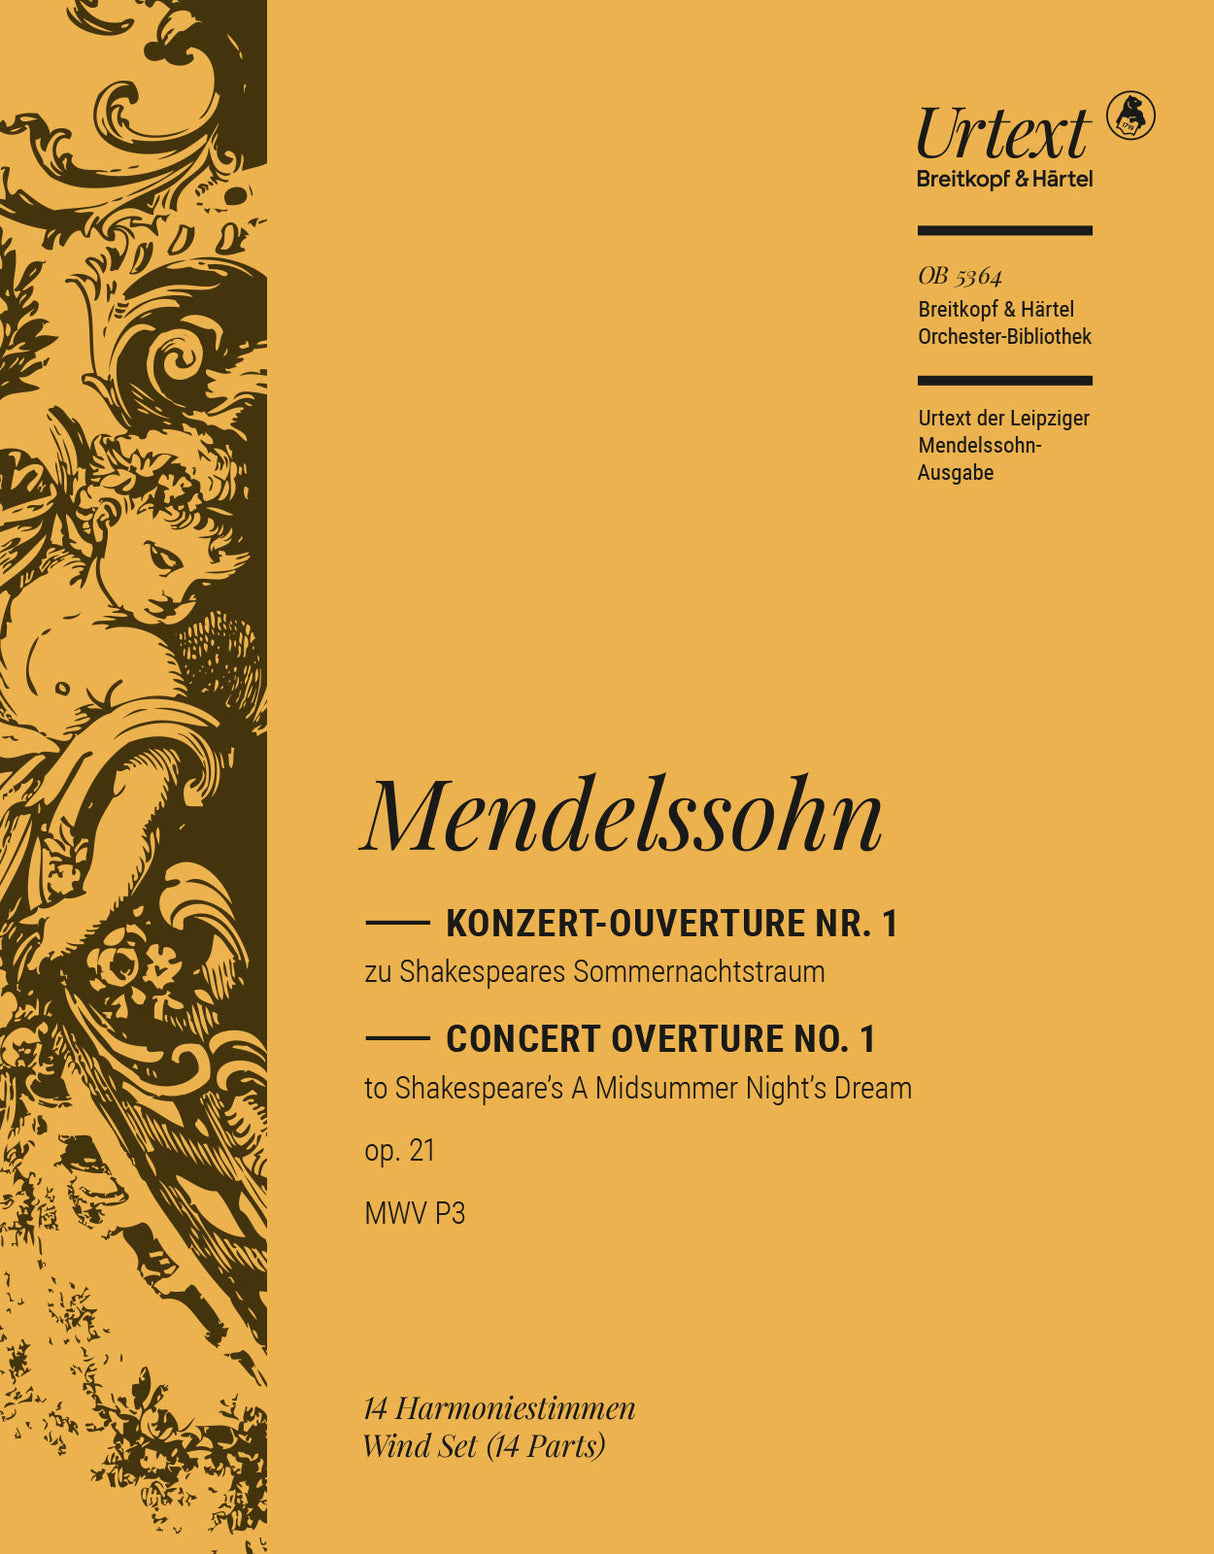 Mendelssohn: A Midsummer Night's Dream Overture, MWV P 3, Op. 21